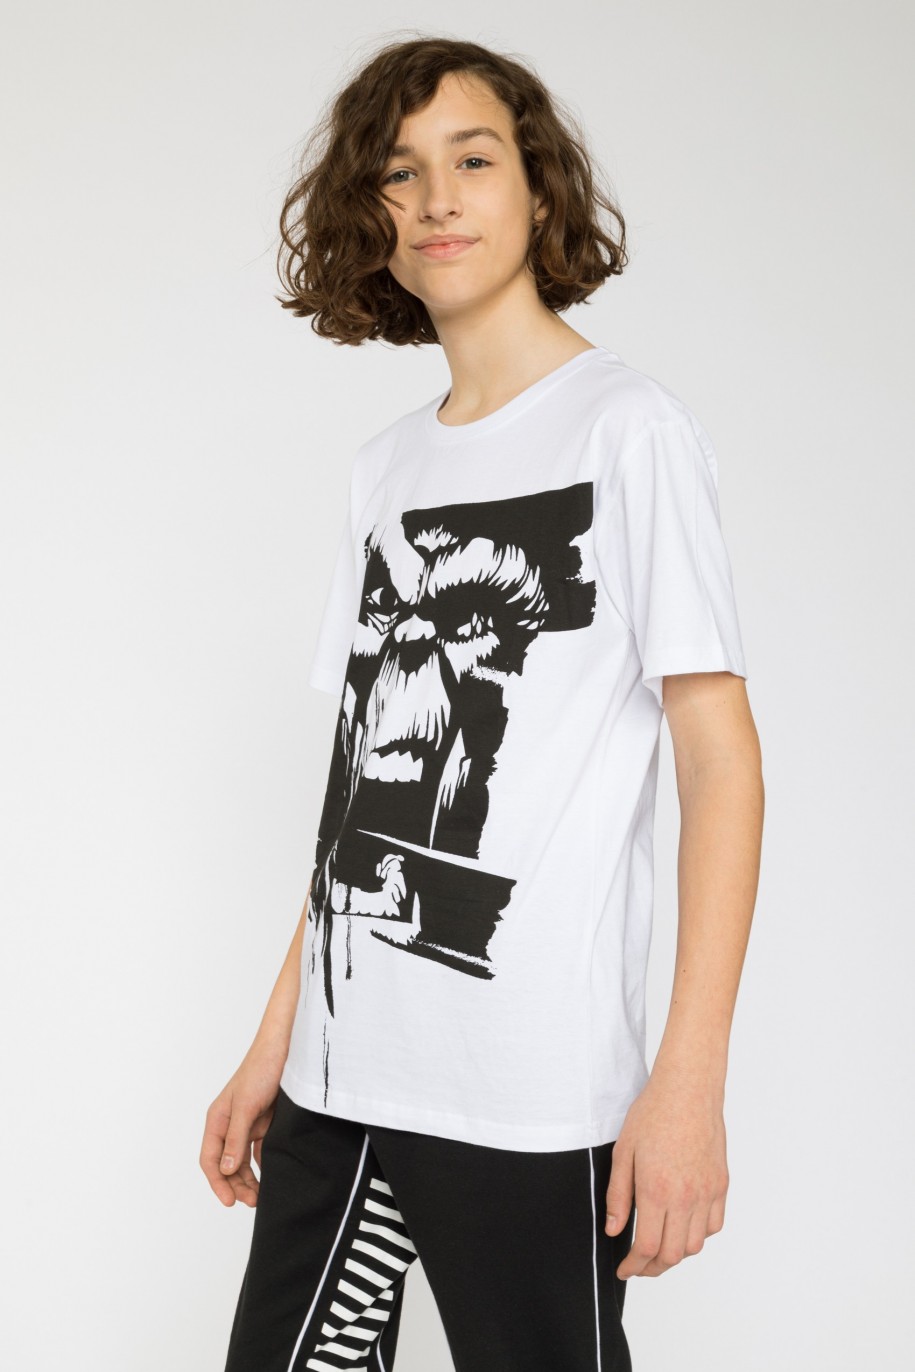 Biały t-shirt dla chłopaka z gorylem REBEL BRUSH - 31660